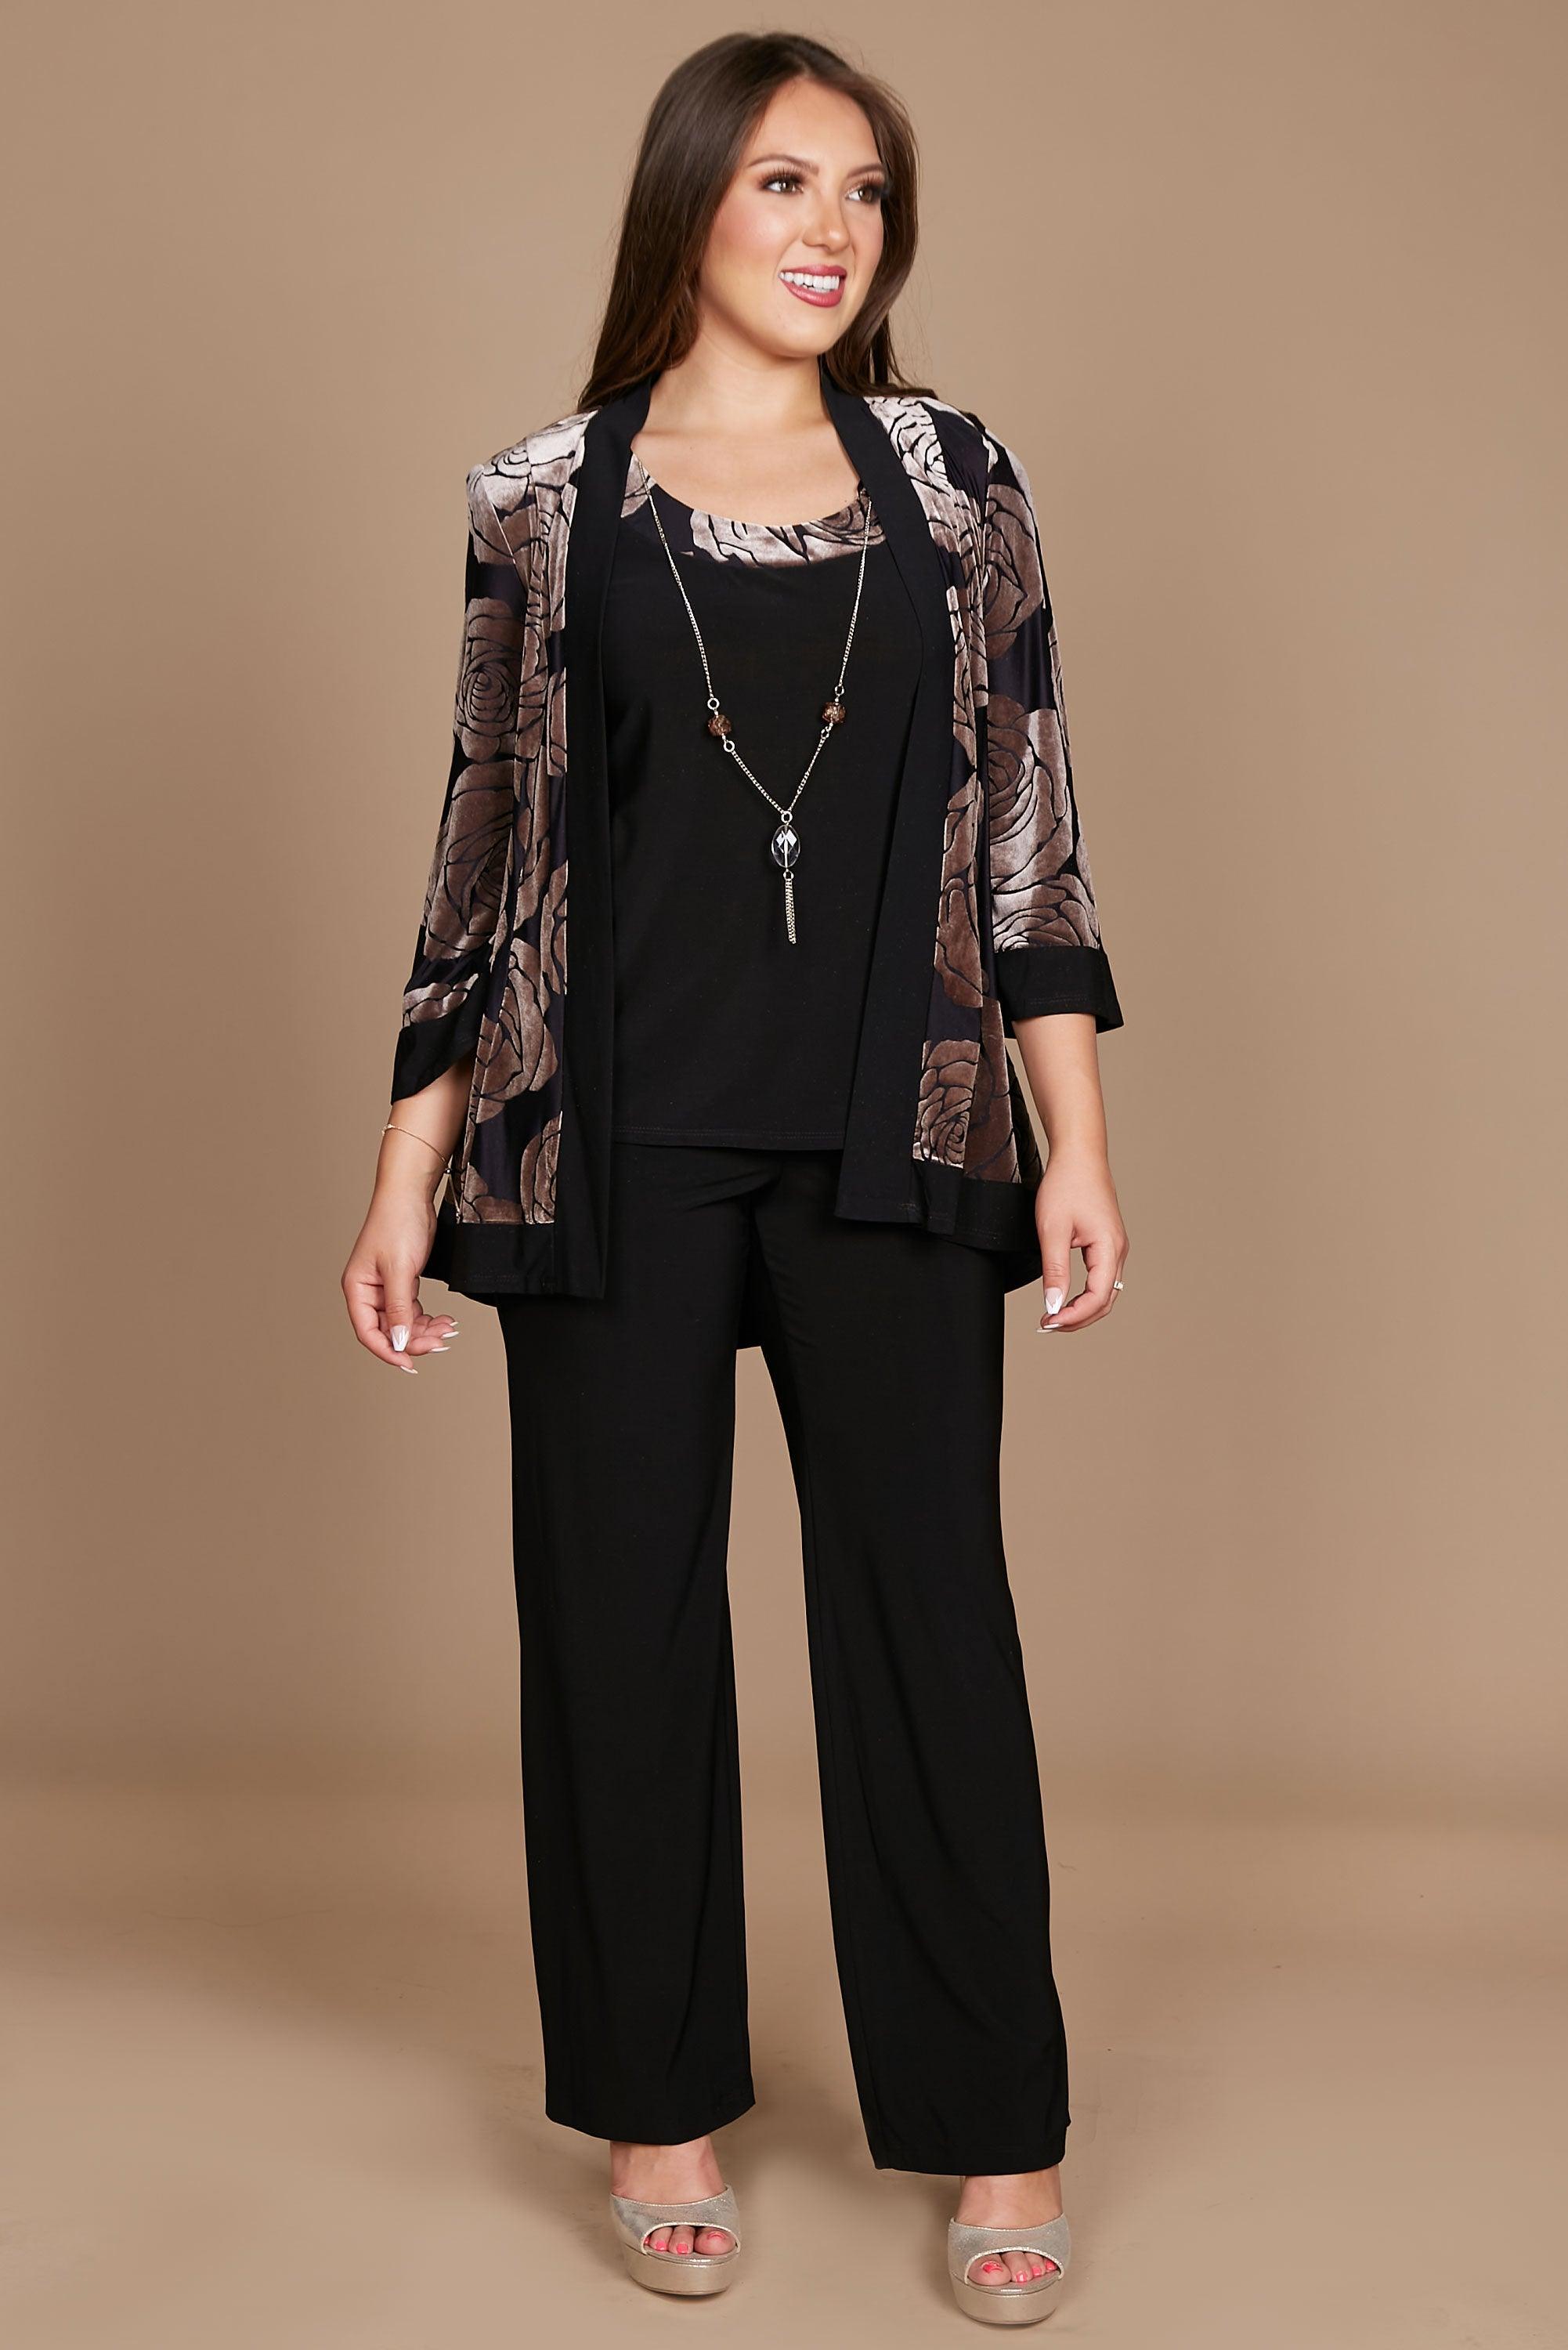 Black/Taupe R&M Richards 9017W Formal Plus Size Black Pant Suit for $89.99,  – The Dress Outlet